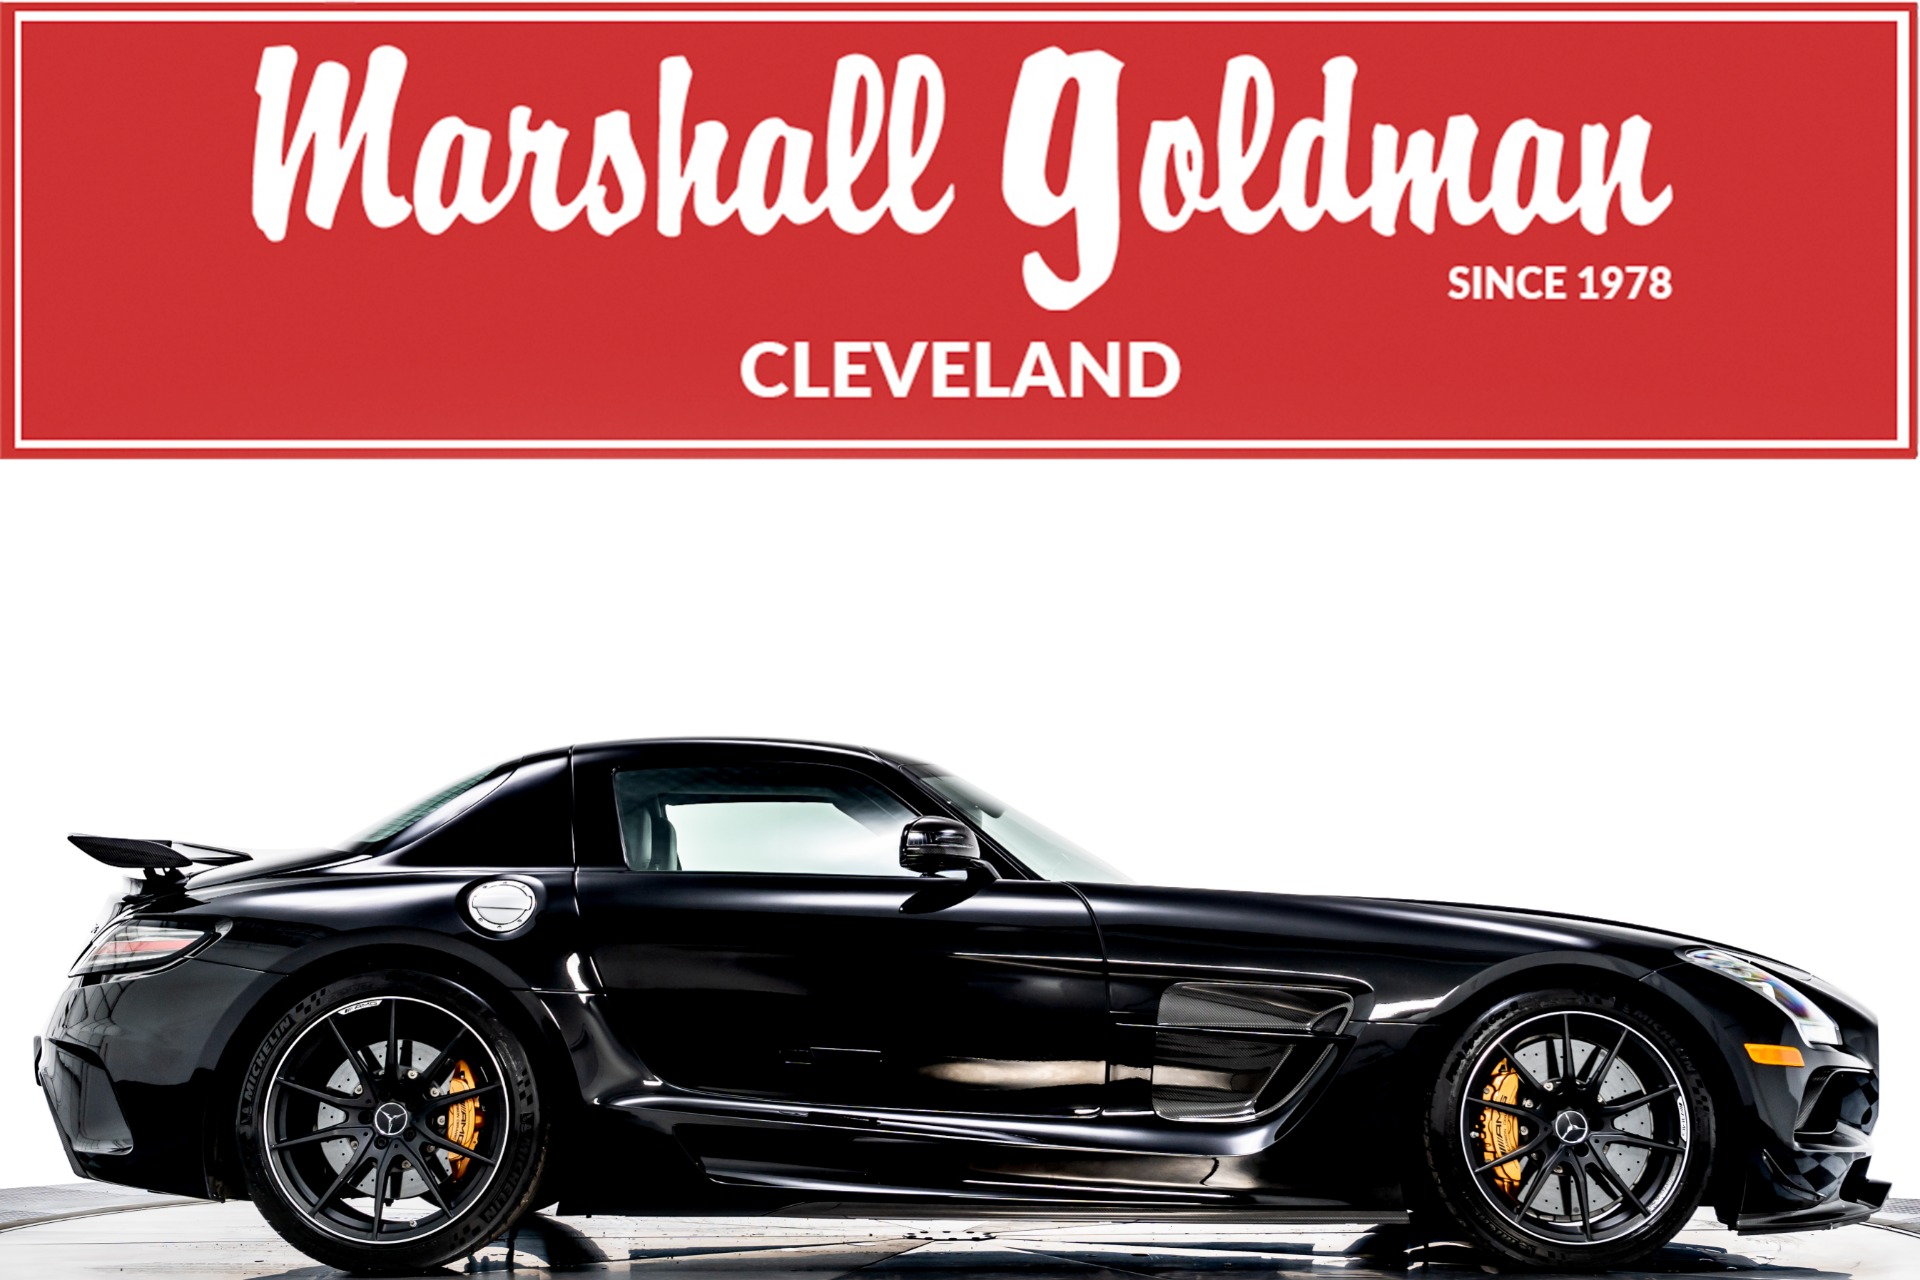 Used 14 Mercedes Benz Sls Amg Black Series For Sale Sold Marshall Goldman Cleveland Stock Slsblk